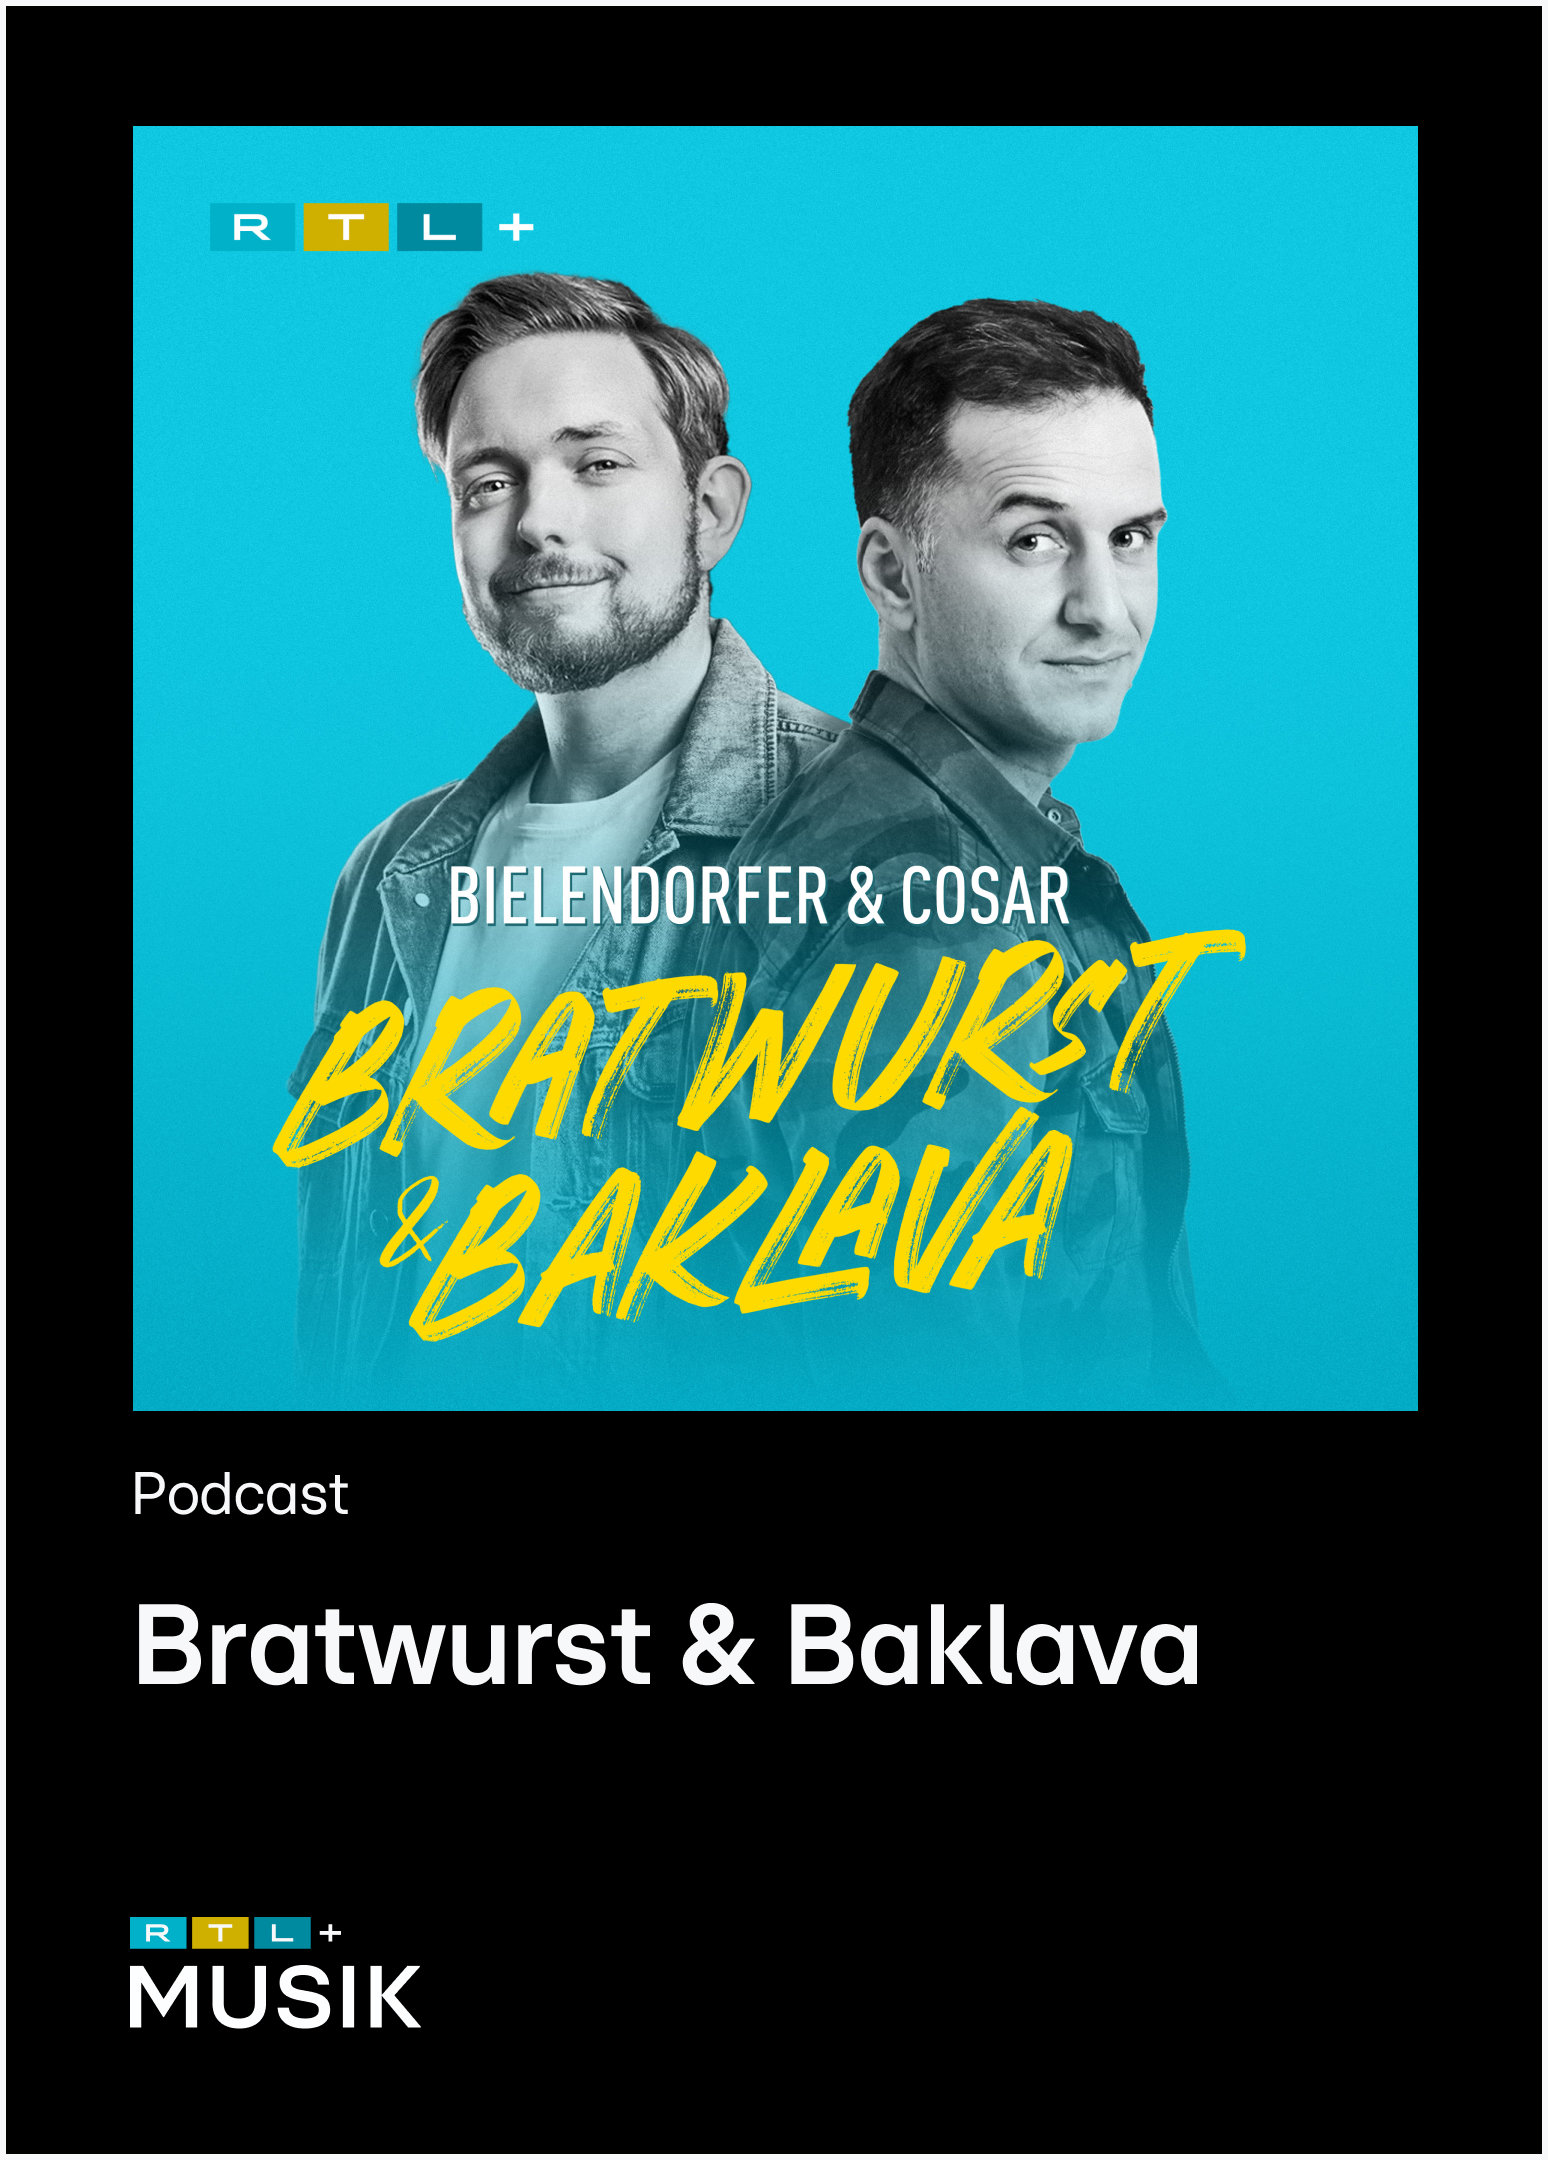 Bratwurst & Baklava